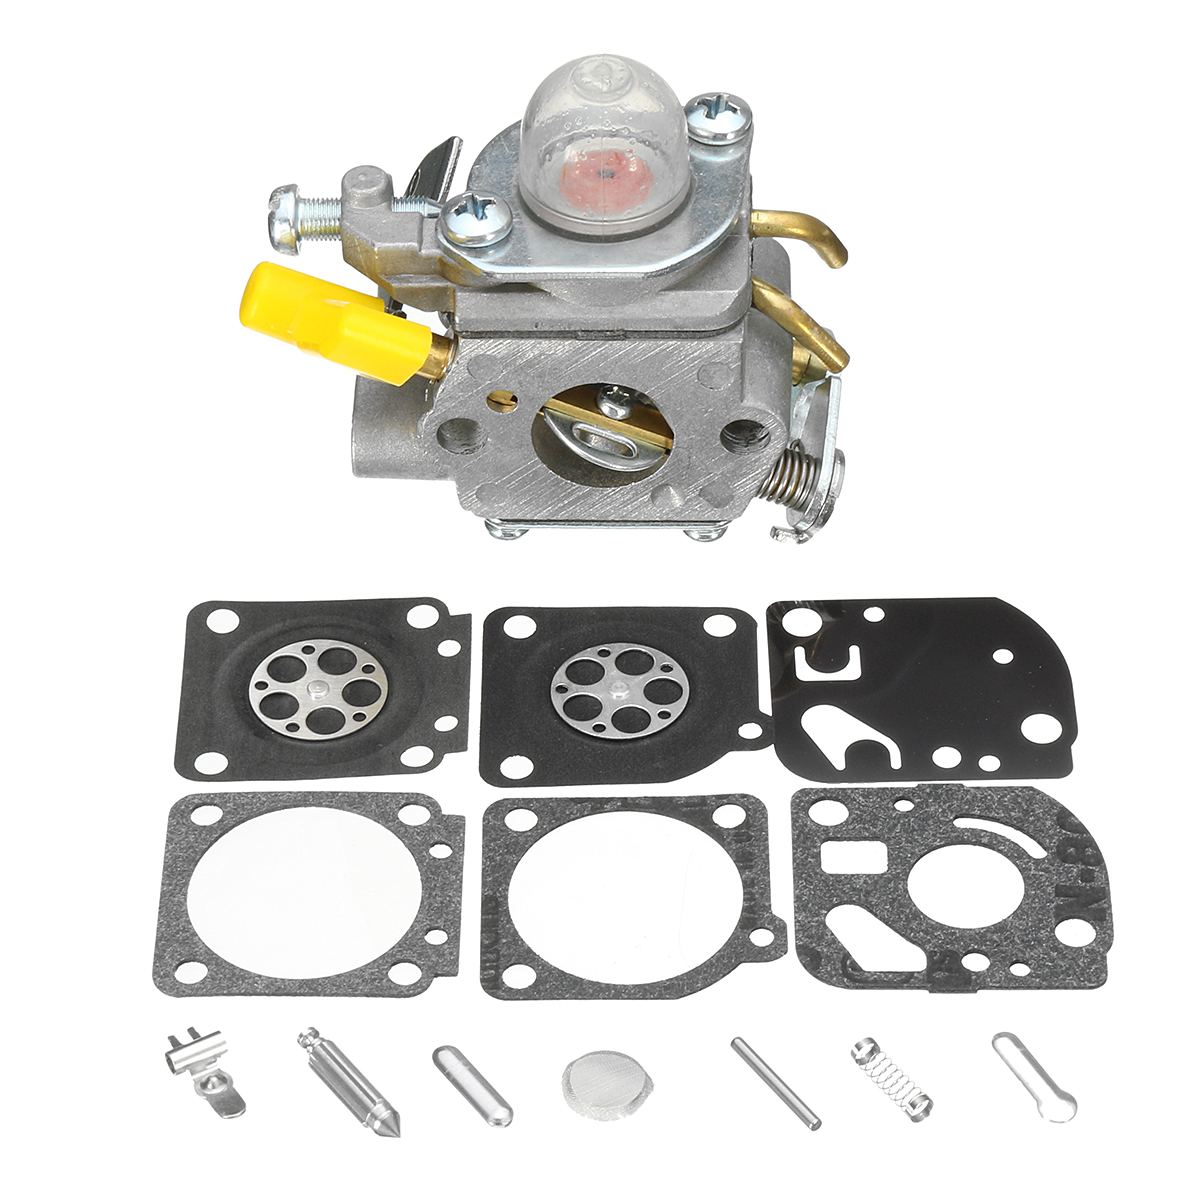 

Carburetor + Rebuild Kit For Homelite Ryobi 25cc String Trimmer Carb 308054003